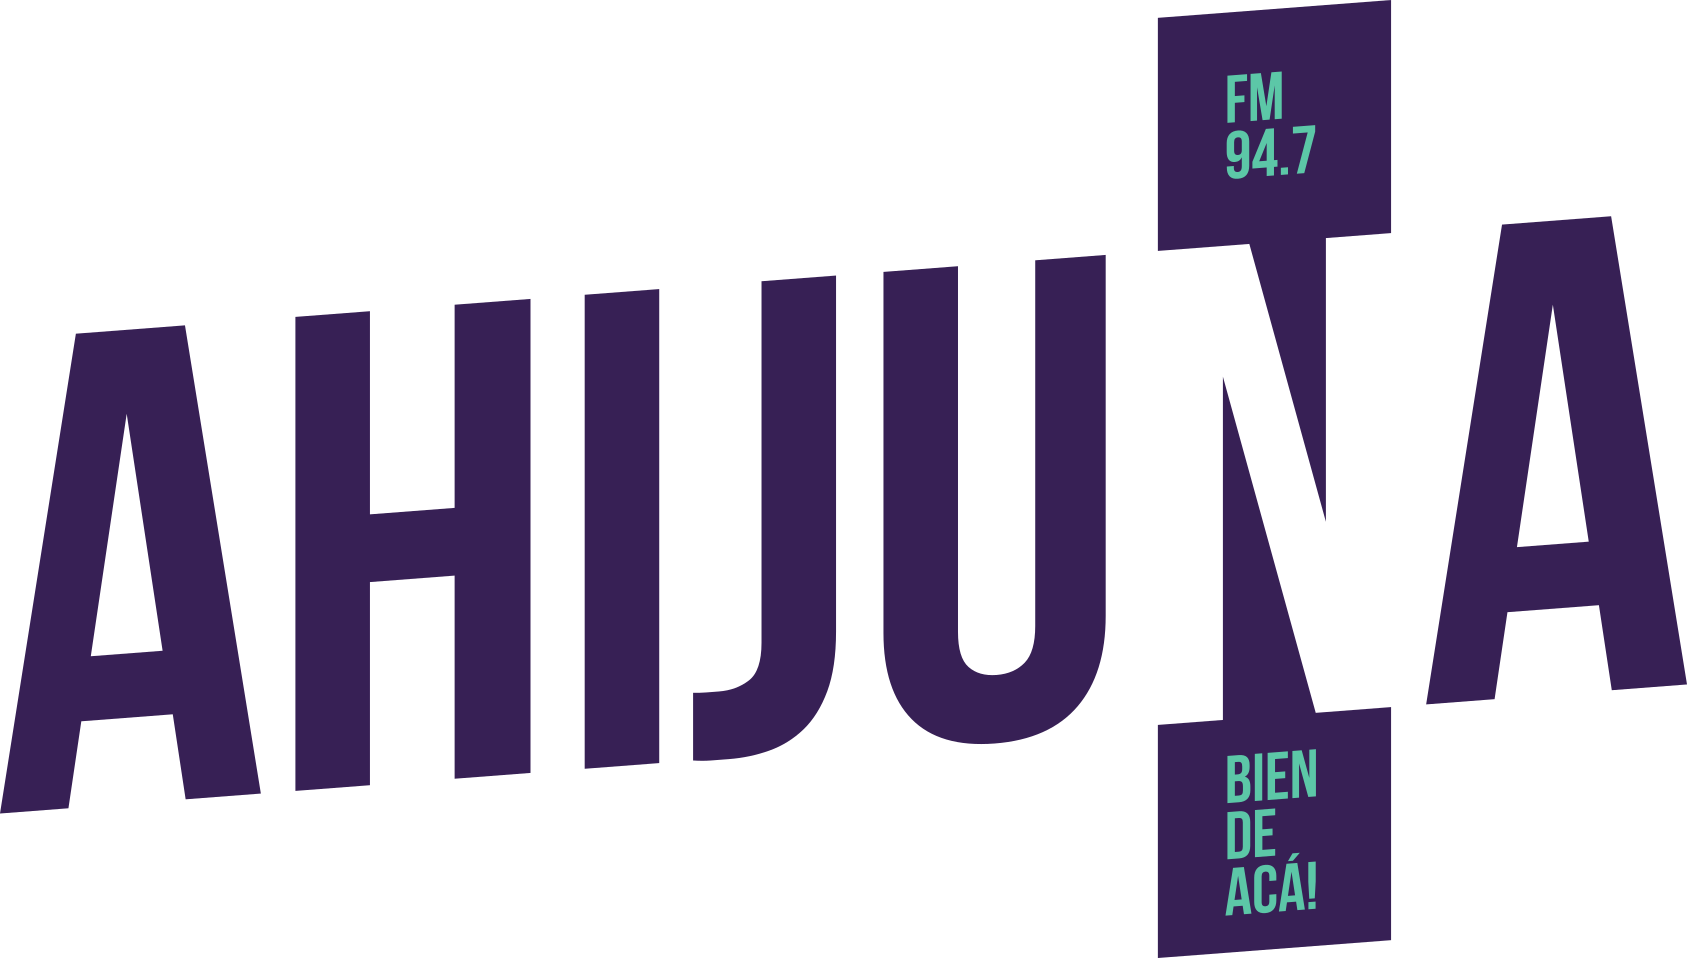 Ahijuna FM 94.7 «bien de acá»